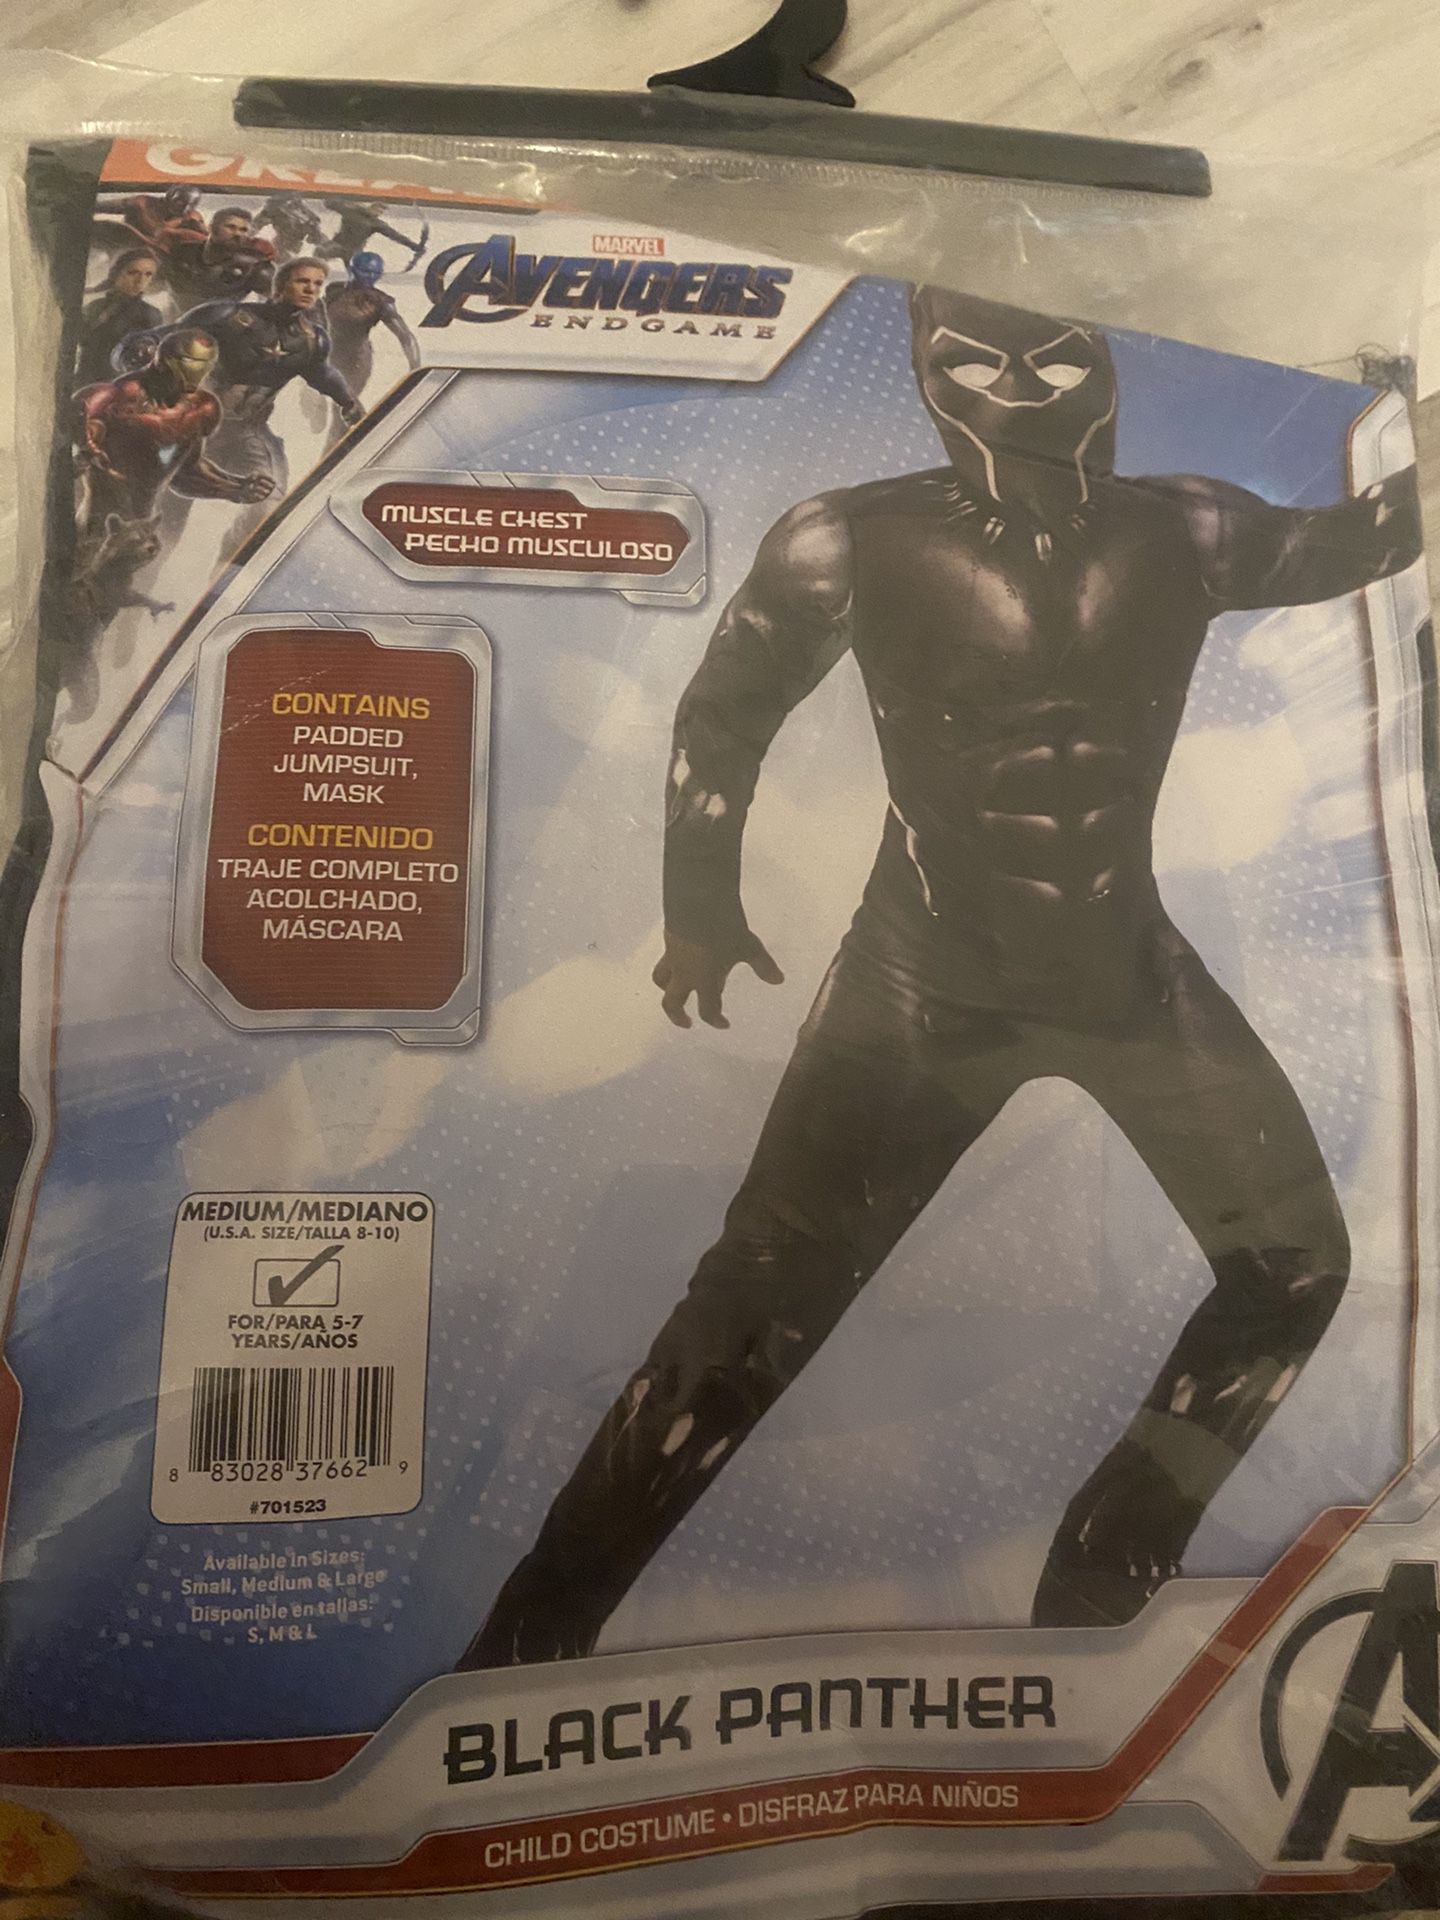 Superhero costumes - Iron Man, Black Panther, Superman, flash, Captain America, Batman